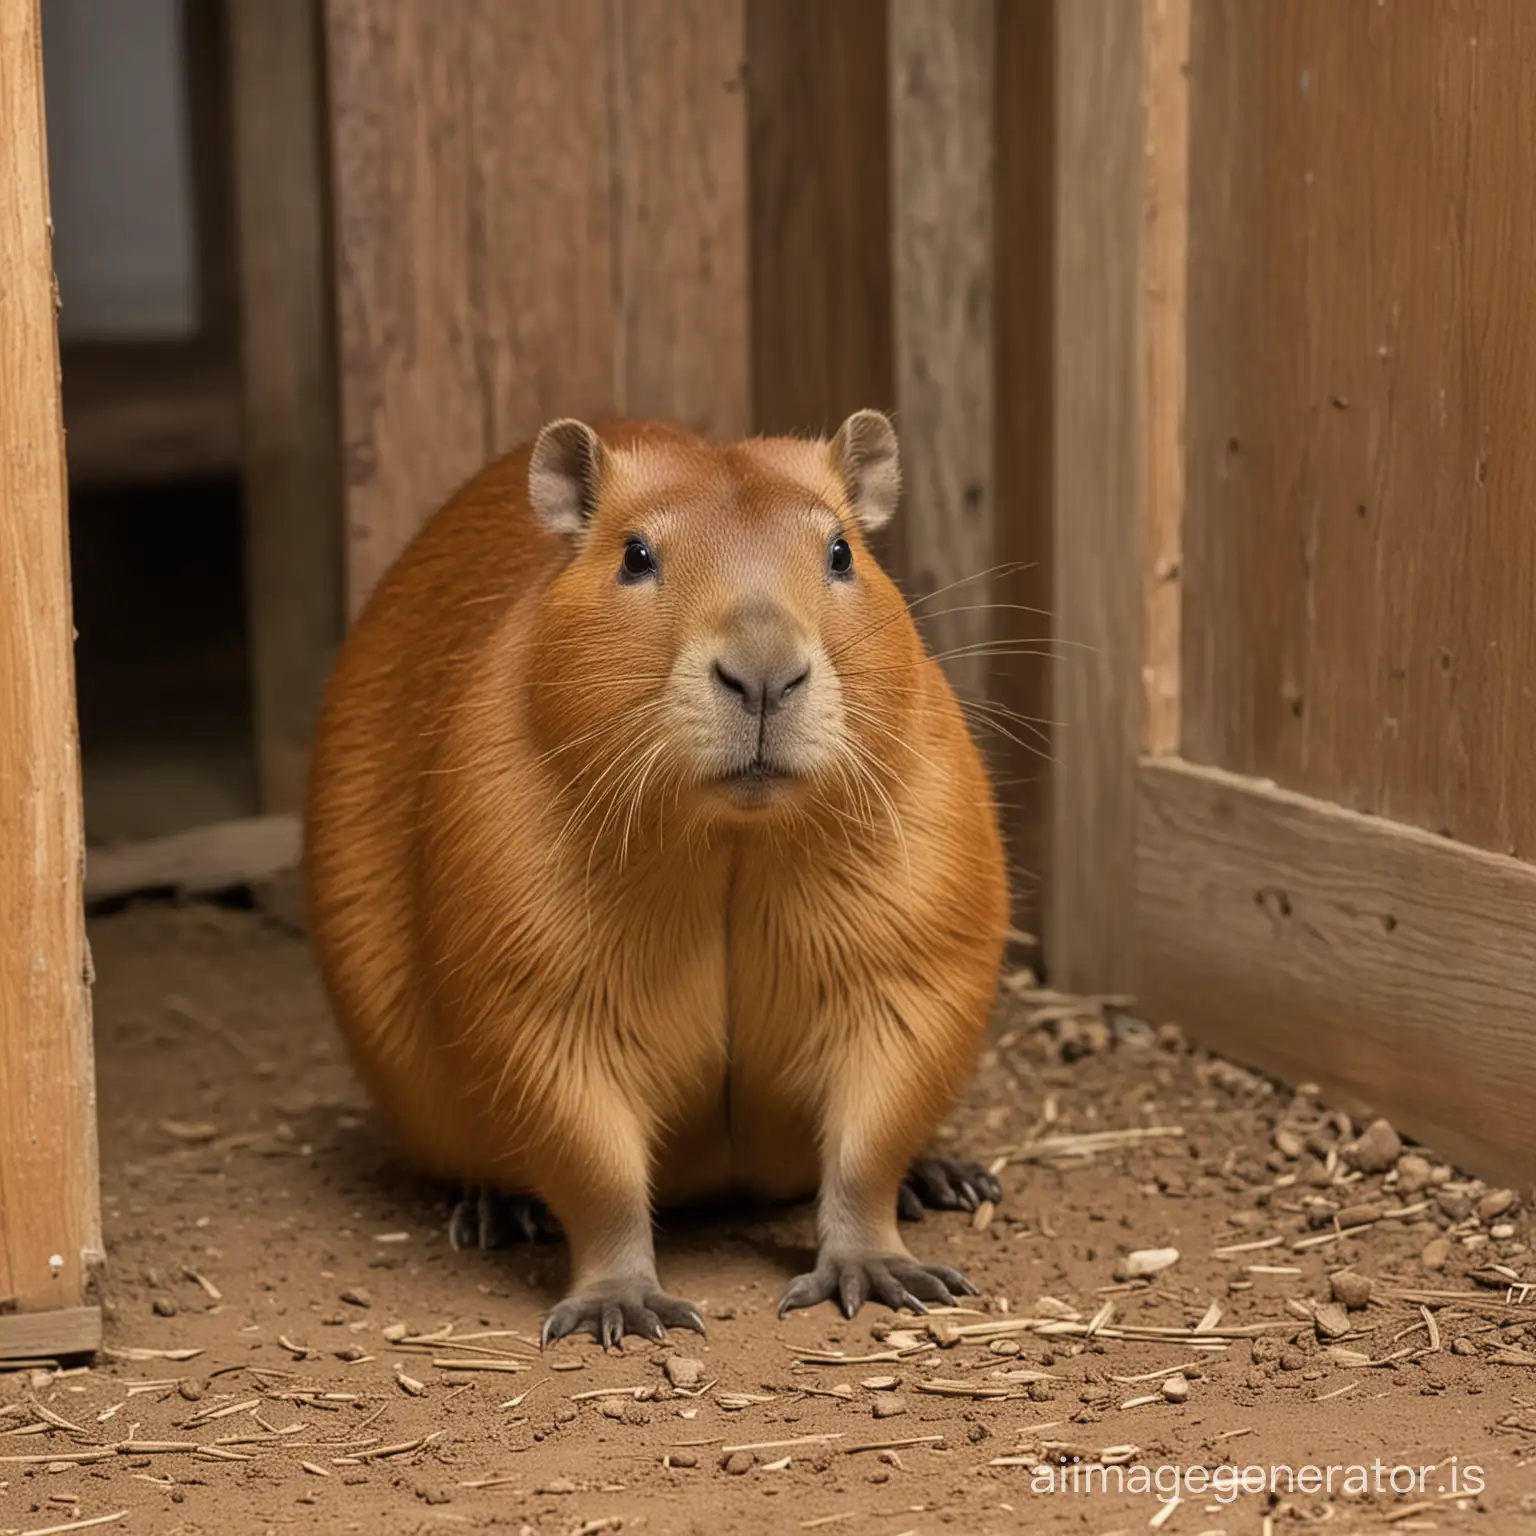 Capybara-Family-Enjoying-Quality-Time-in-a-Cozy-Home